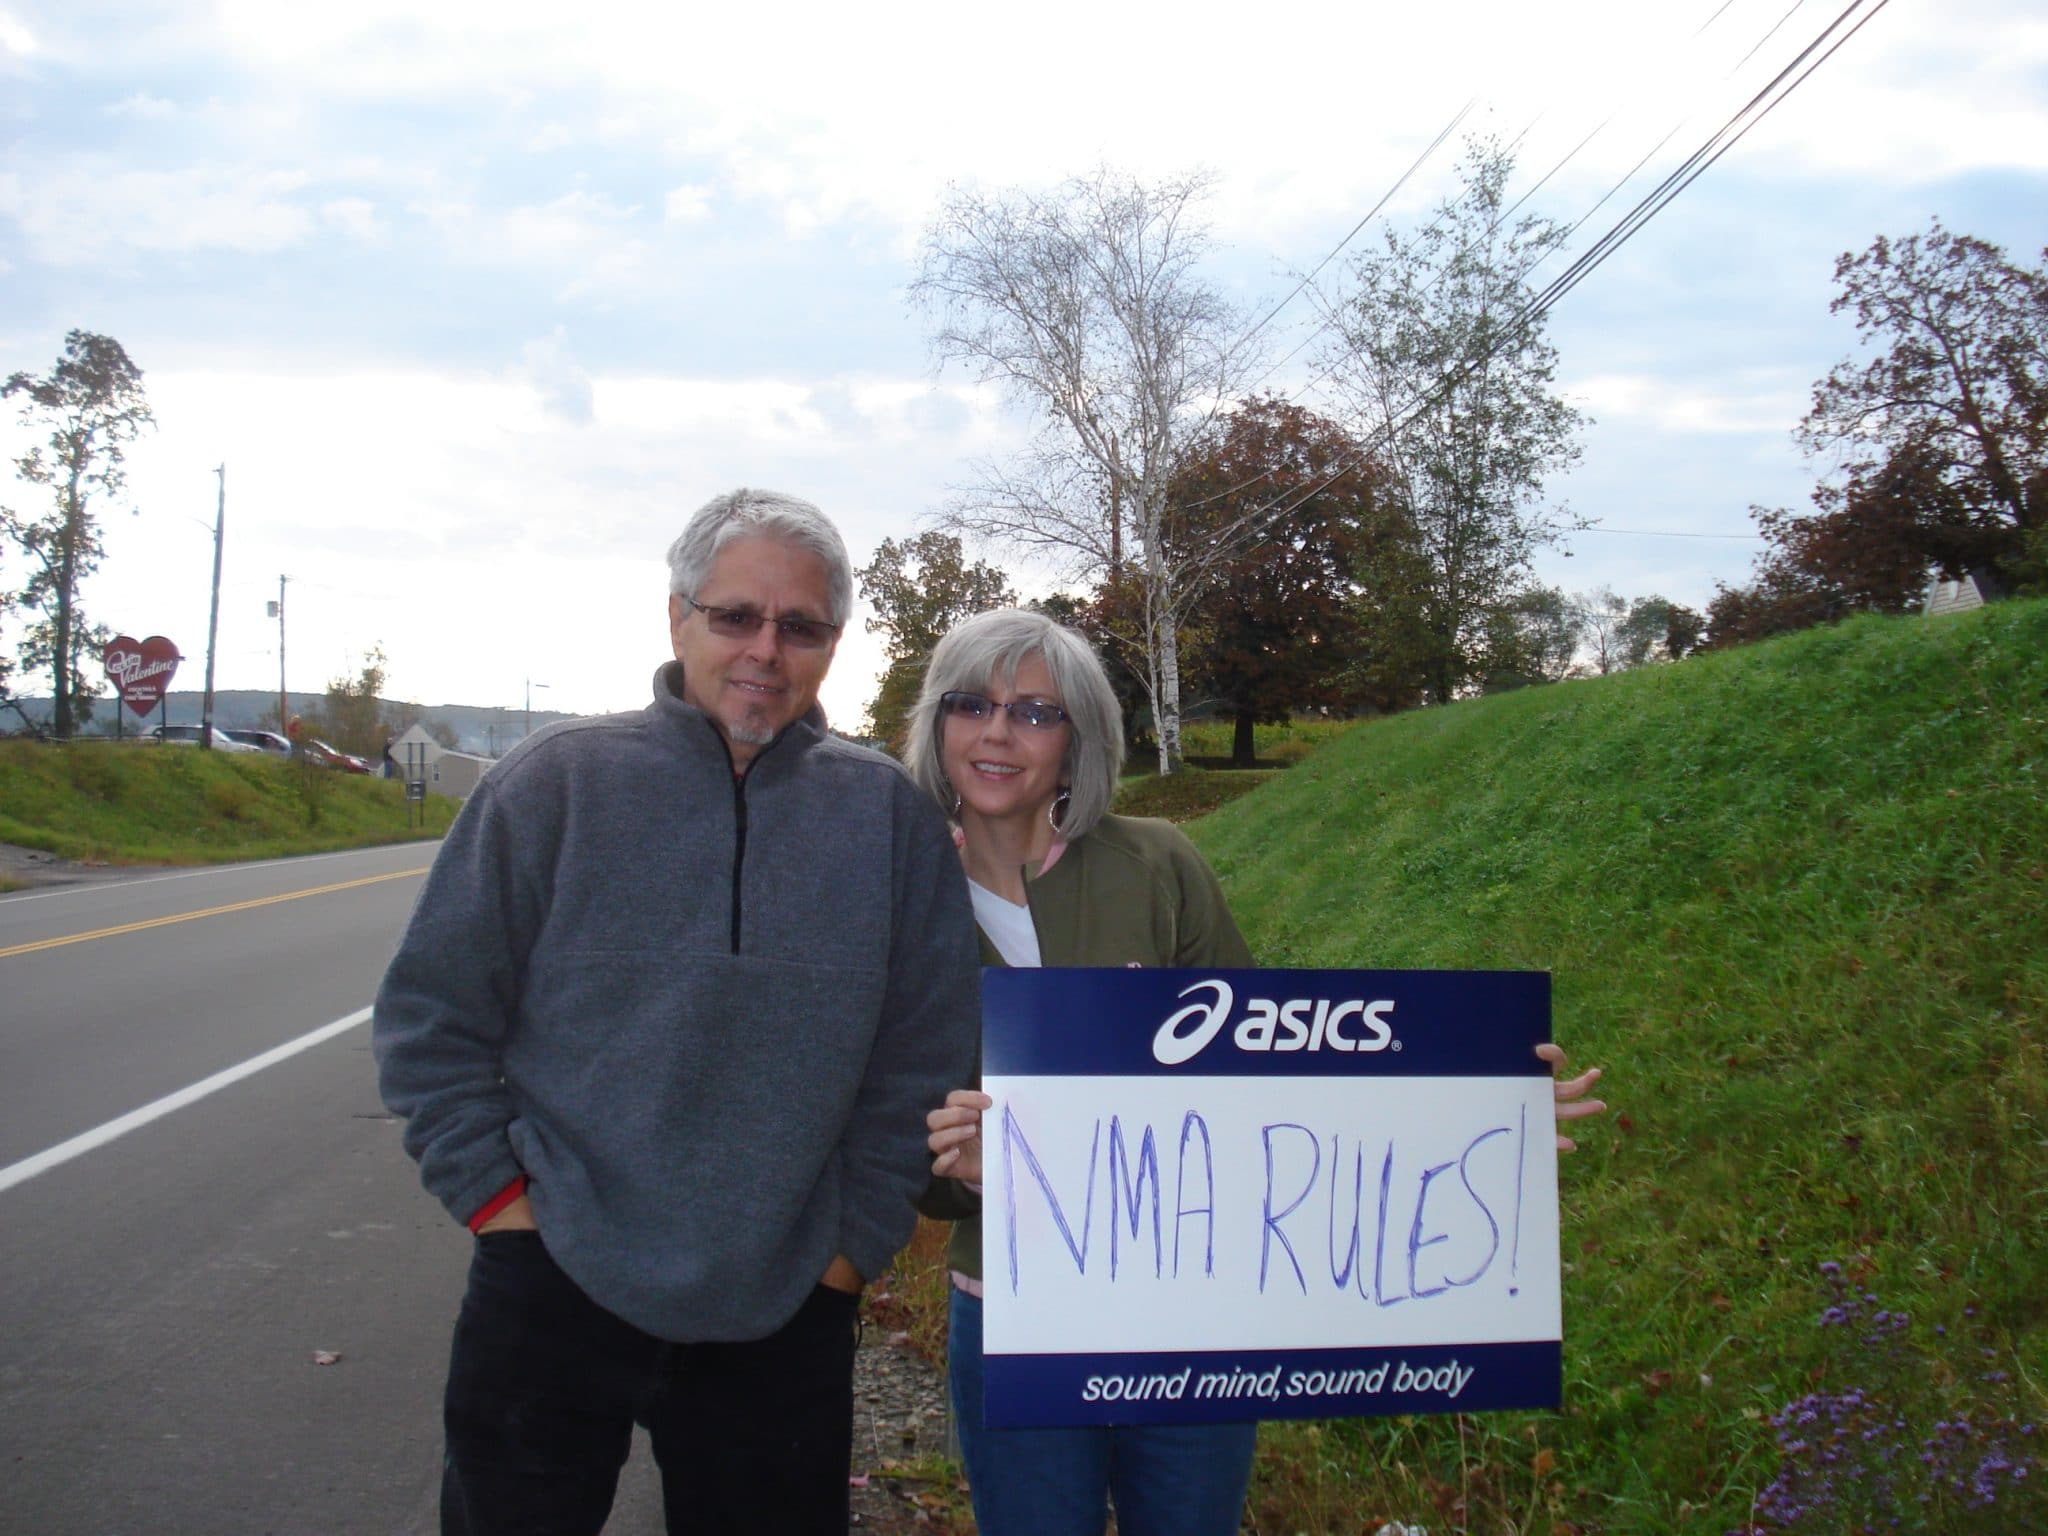 Matt parents with "NMA Rules" sign supporting Matt